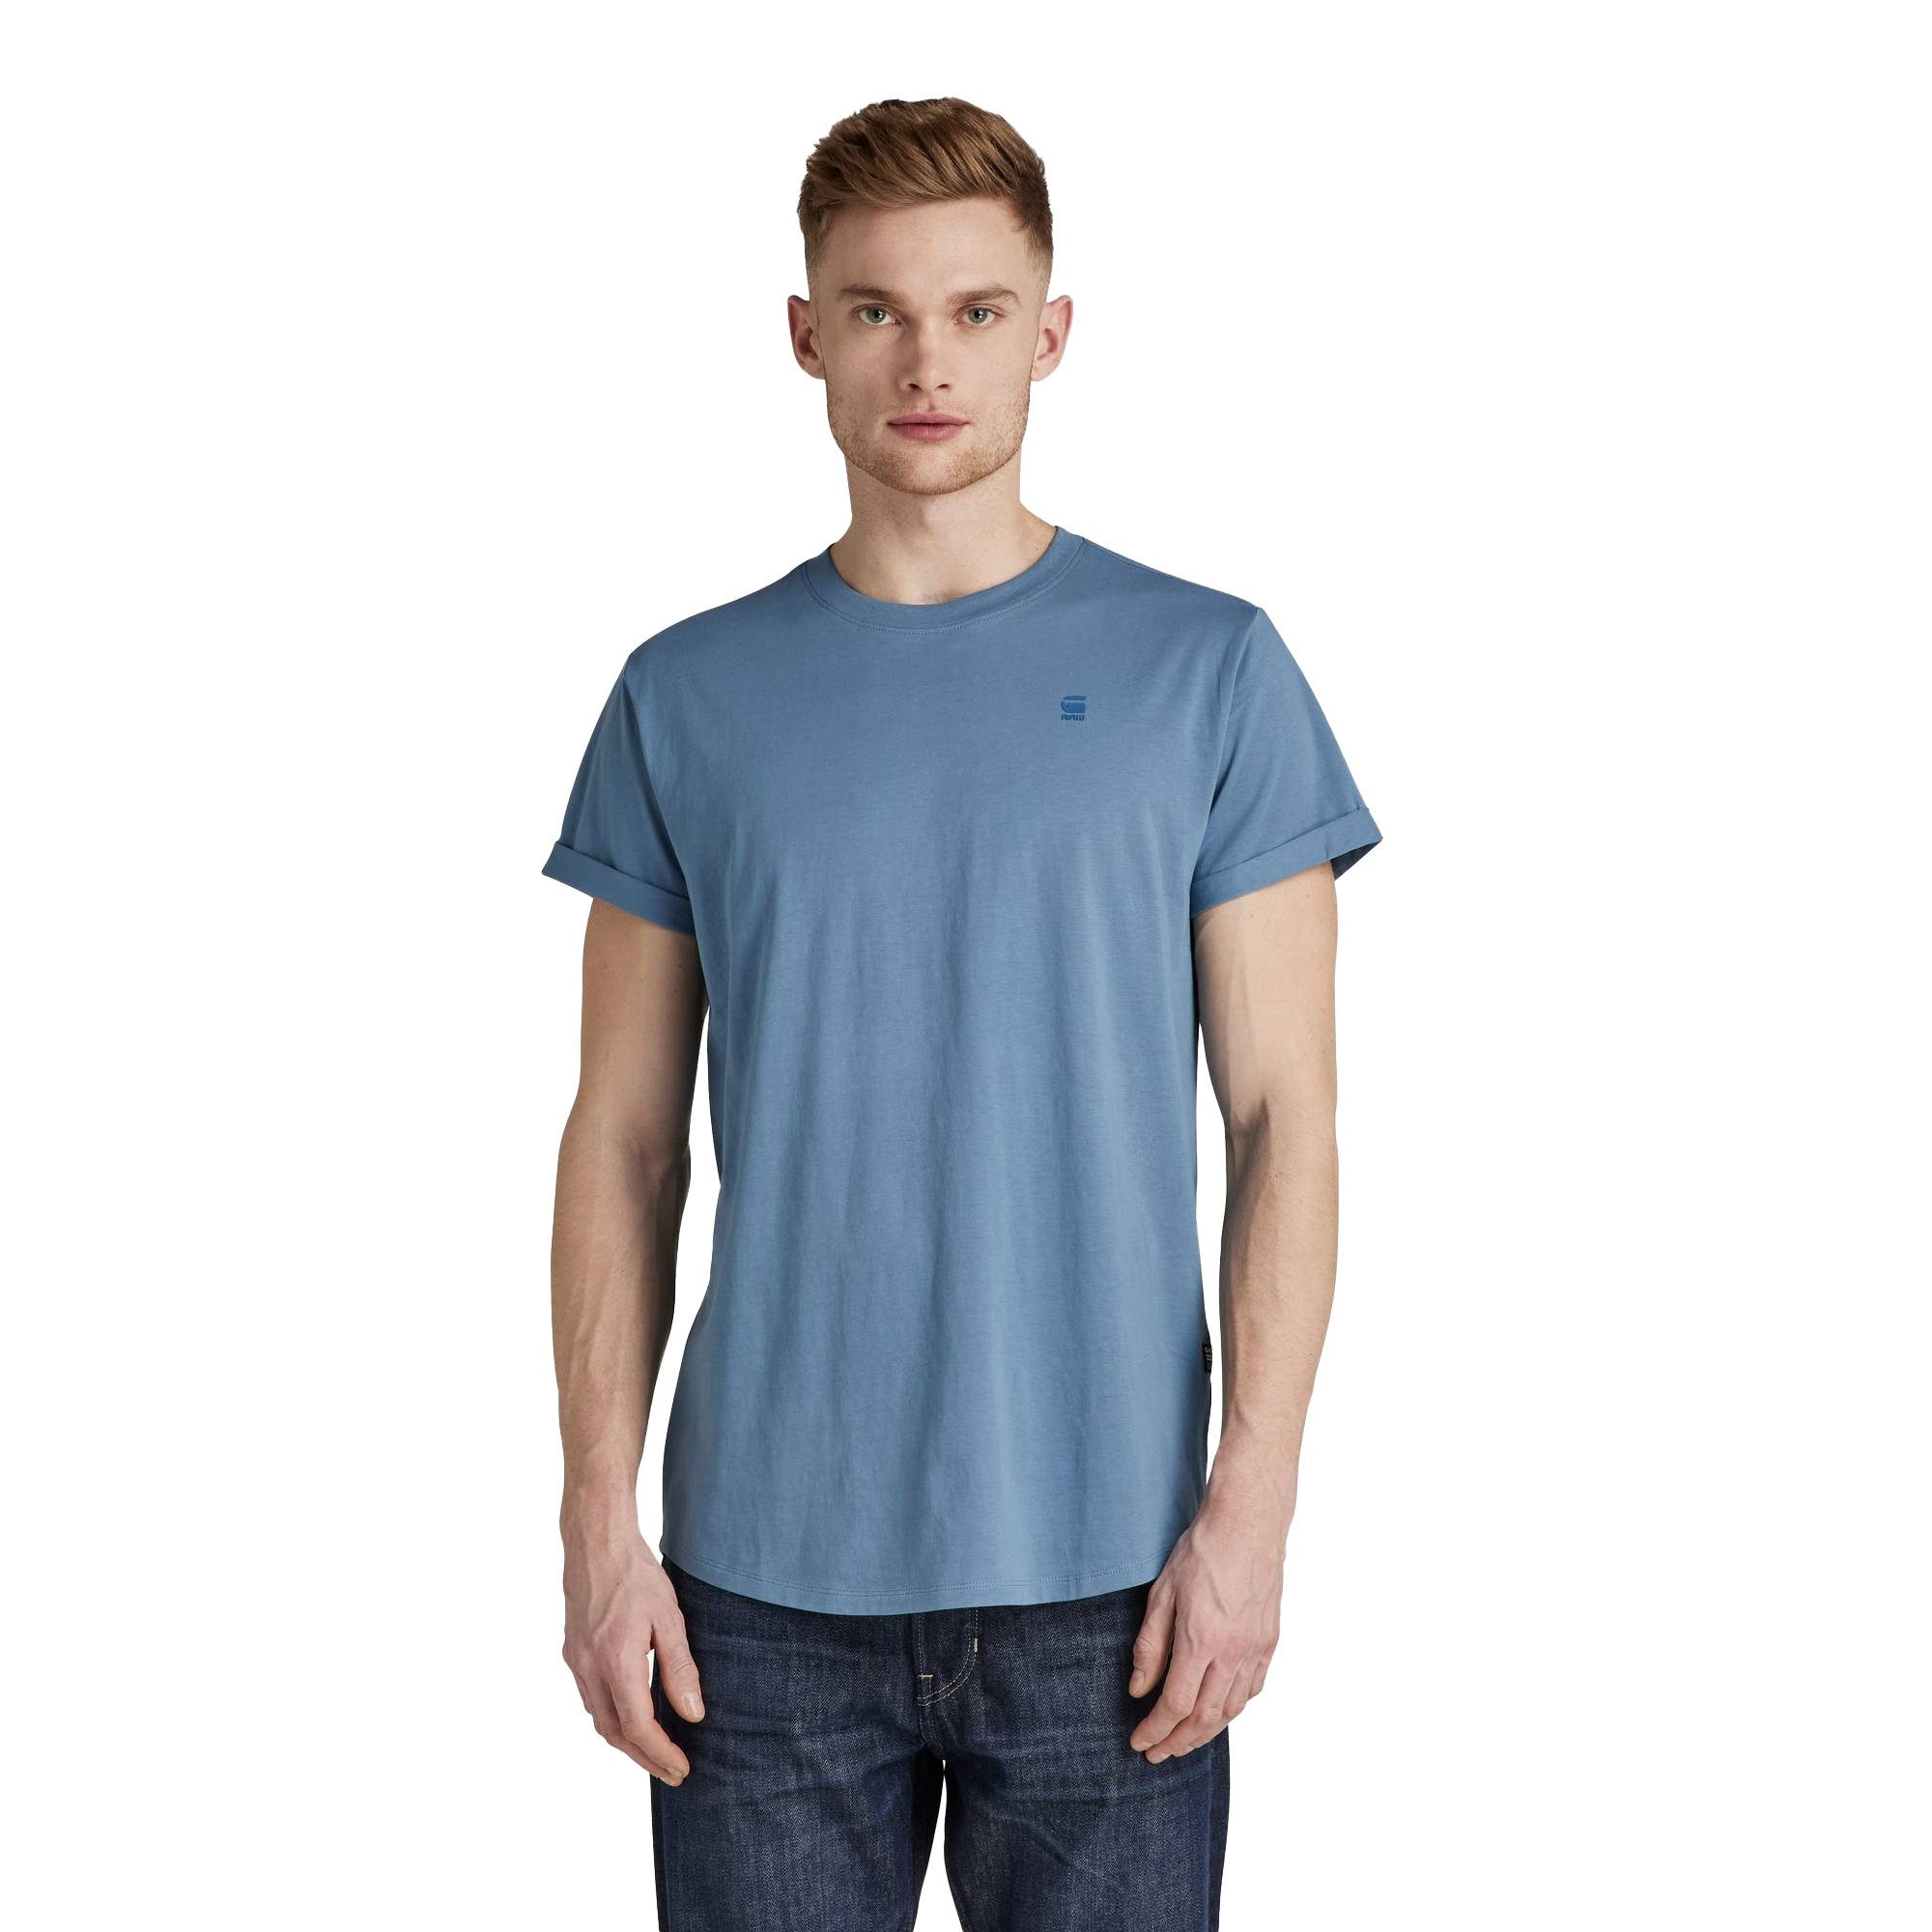 G-Star RAW T-Shirt Cotton - Organic T-Shirt Lash, Herren Hellblau Rundhals